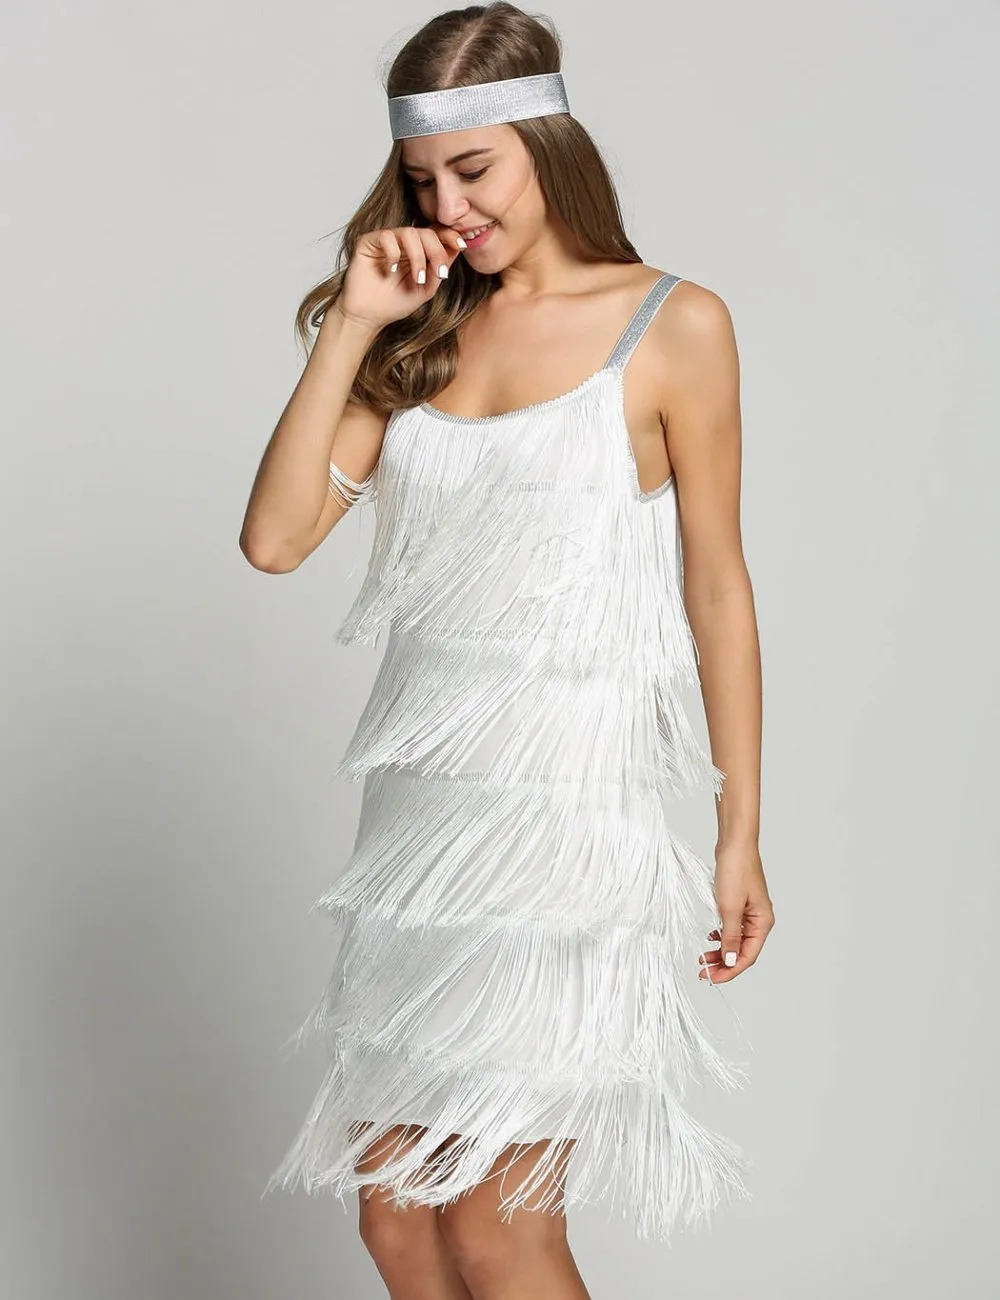 flapper fringe dress (12)